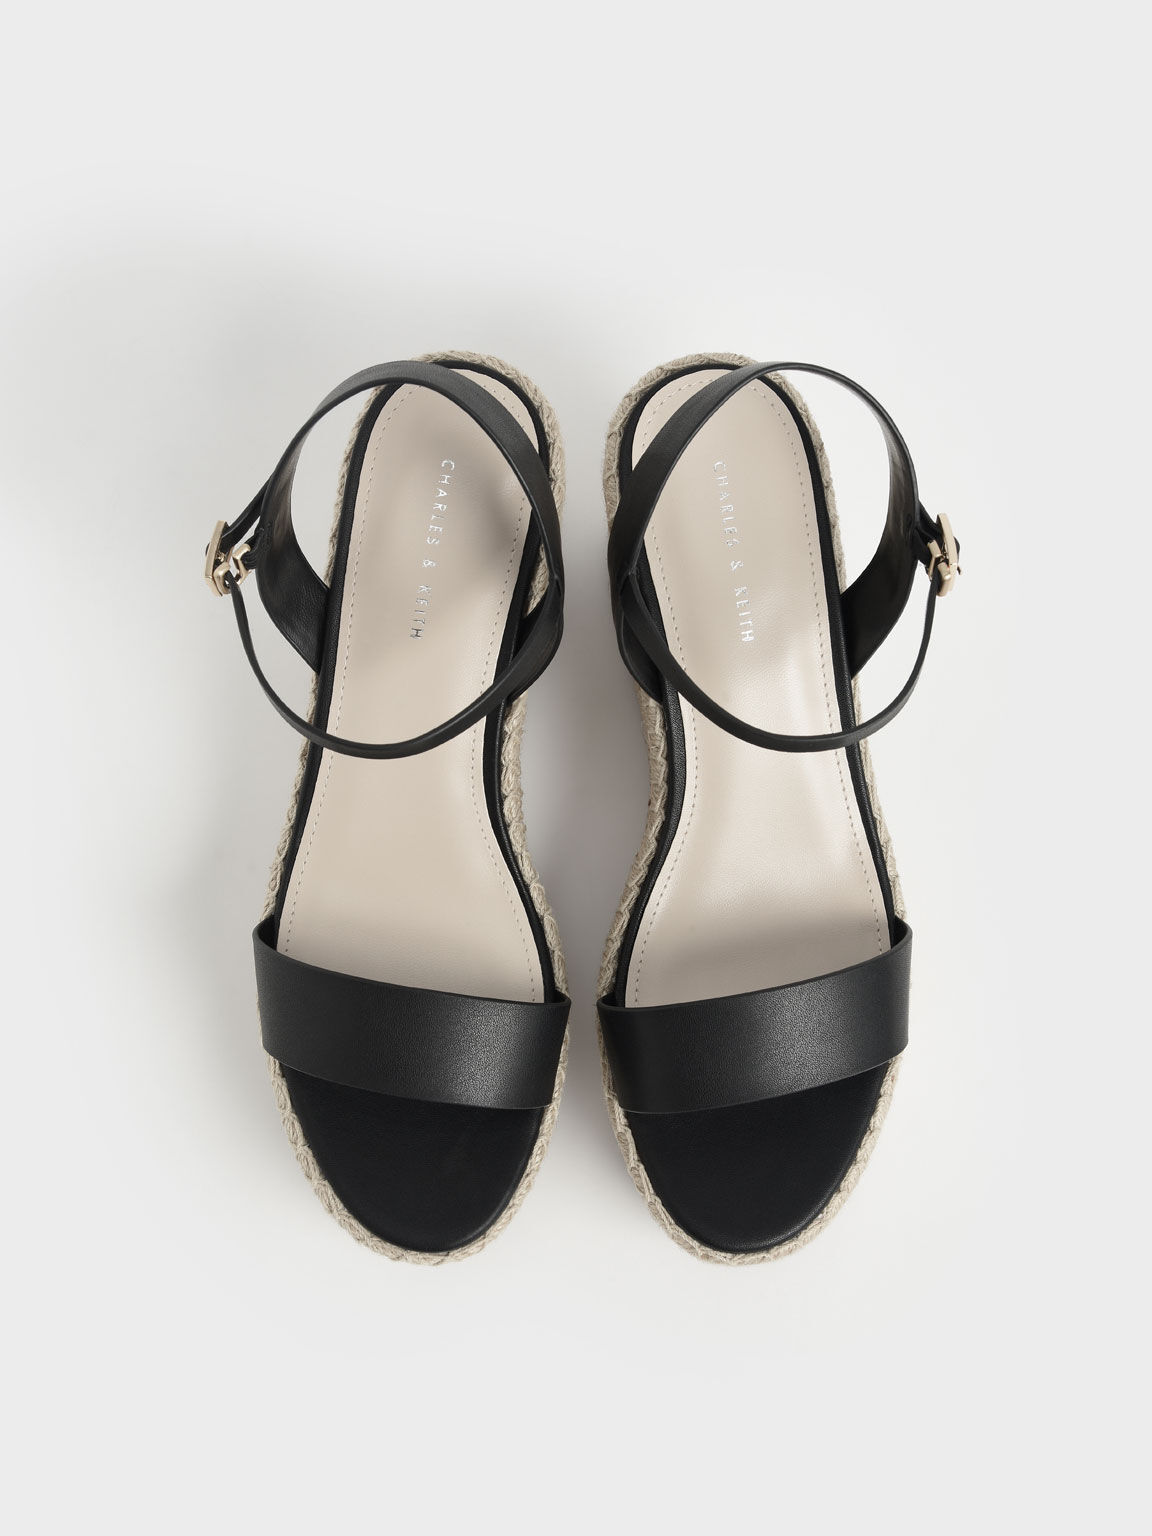 Sepatu Wedges Ankle Strap Espadrille, Black, hi-res